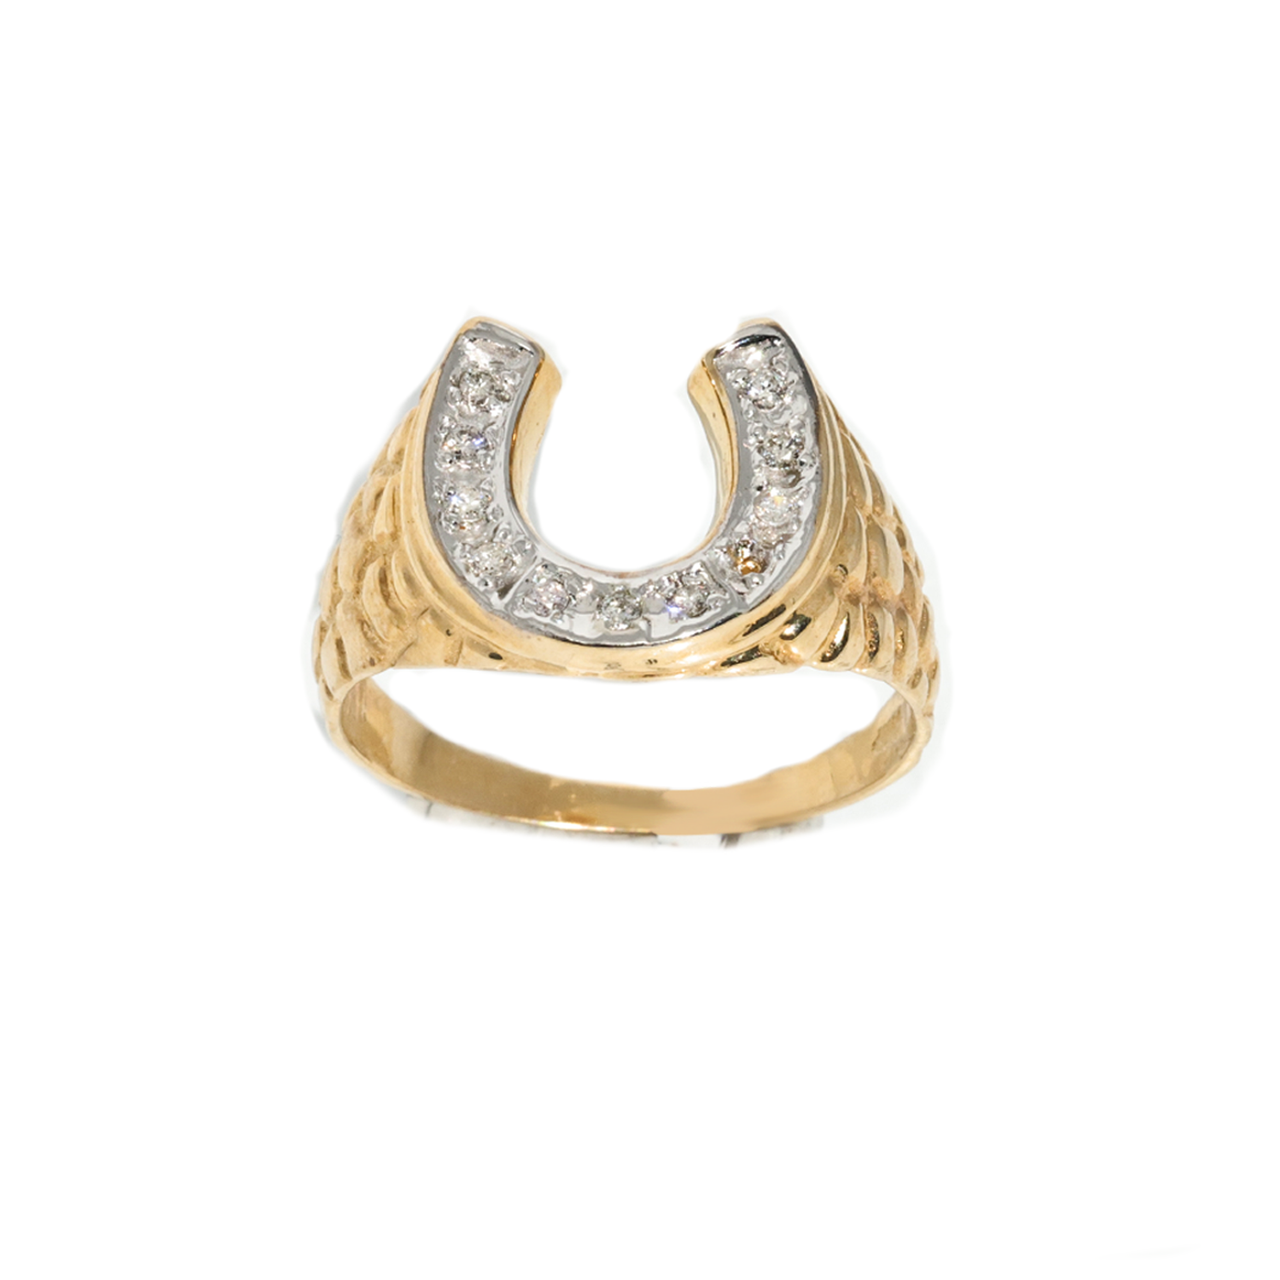 8 / White 14K Yellow Gold Horse Shoe Ring 0.54 Ctw